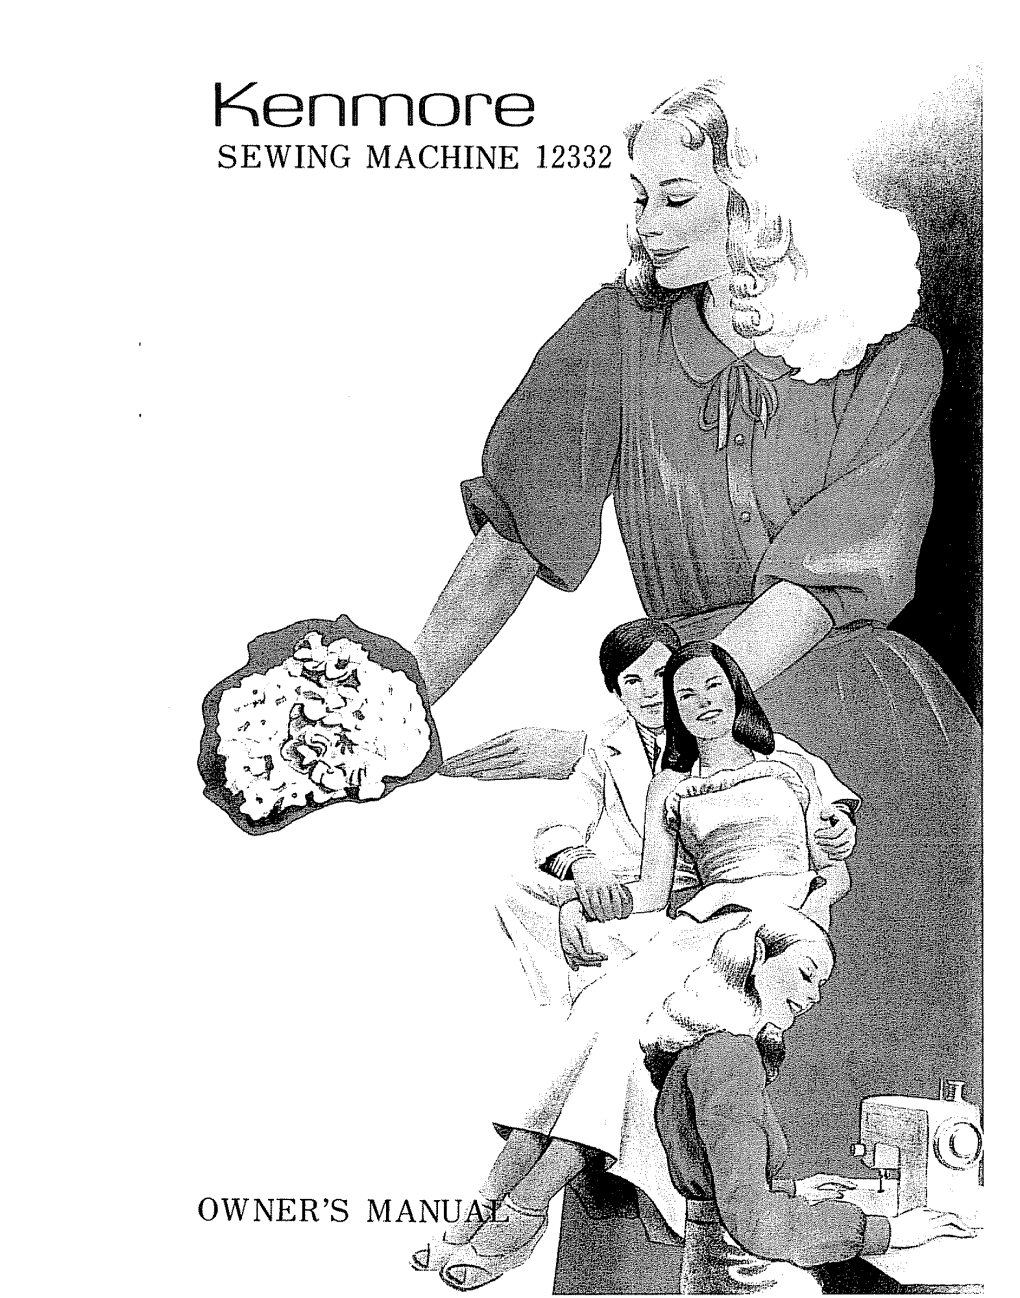 Kenm SEWING MACHINE 1.2332